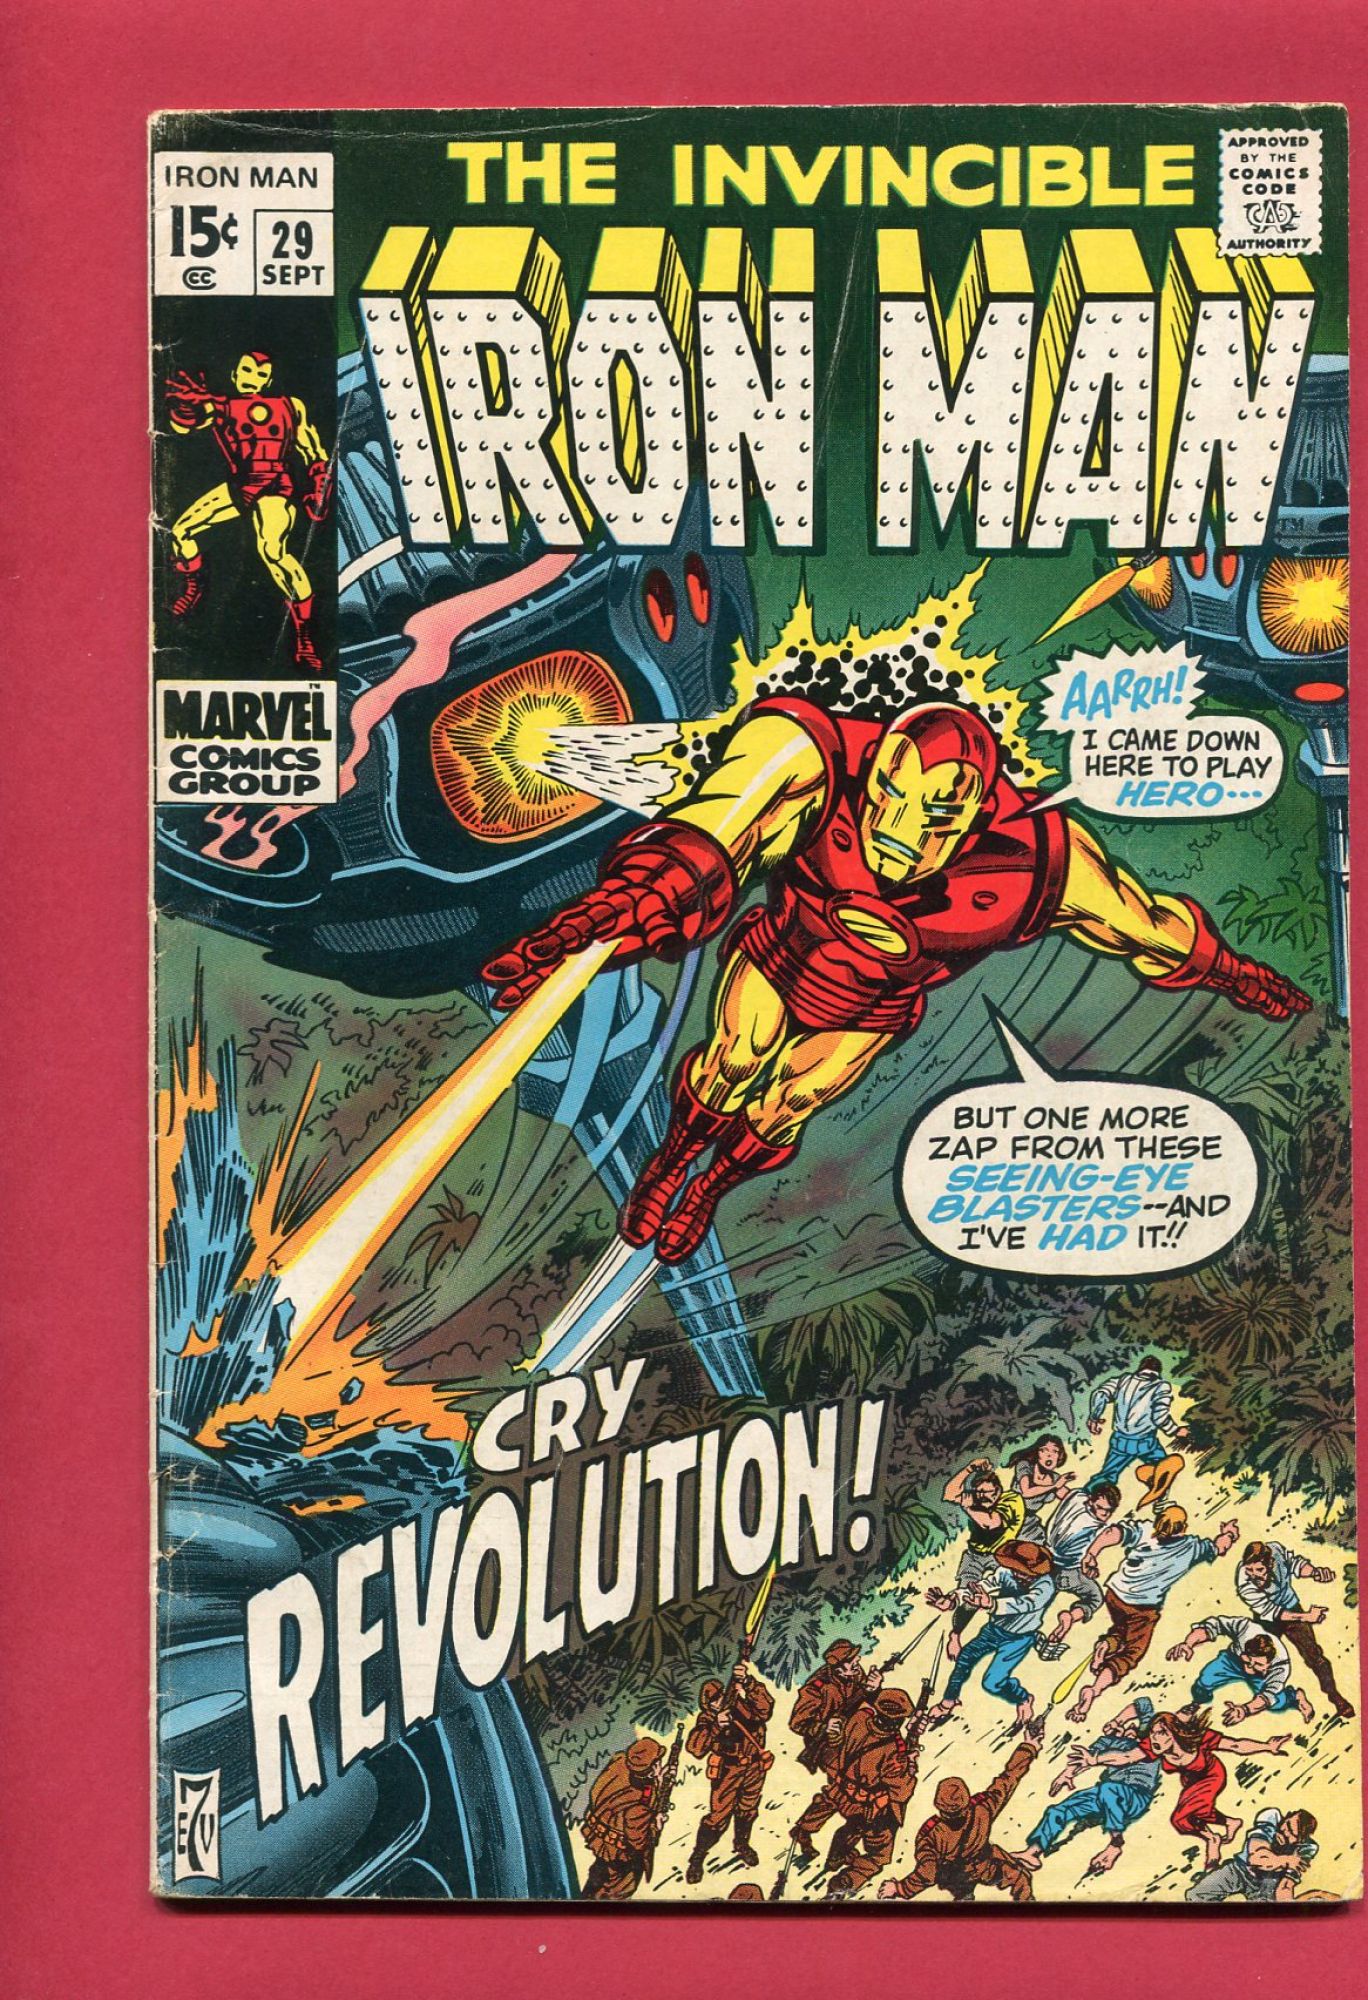 Iron Man #29, Sep 1970, 4.5 VG+